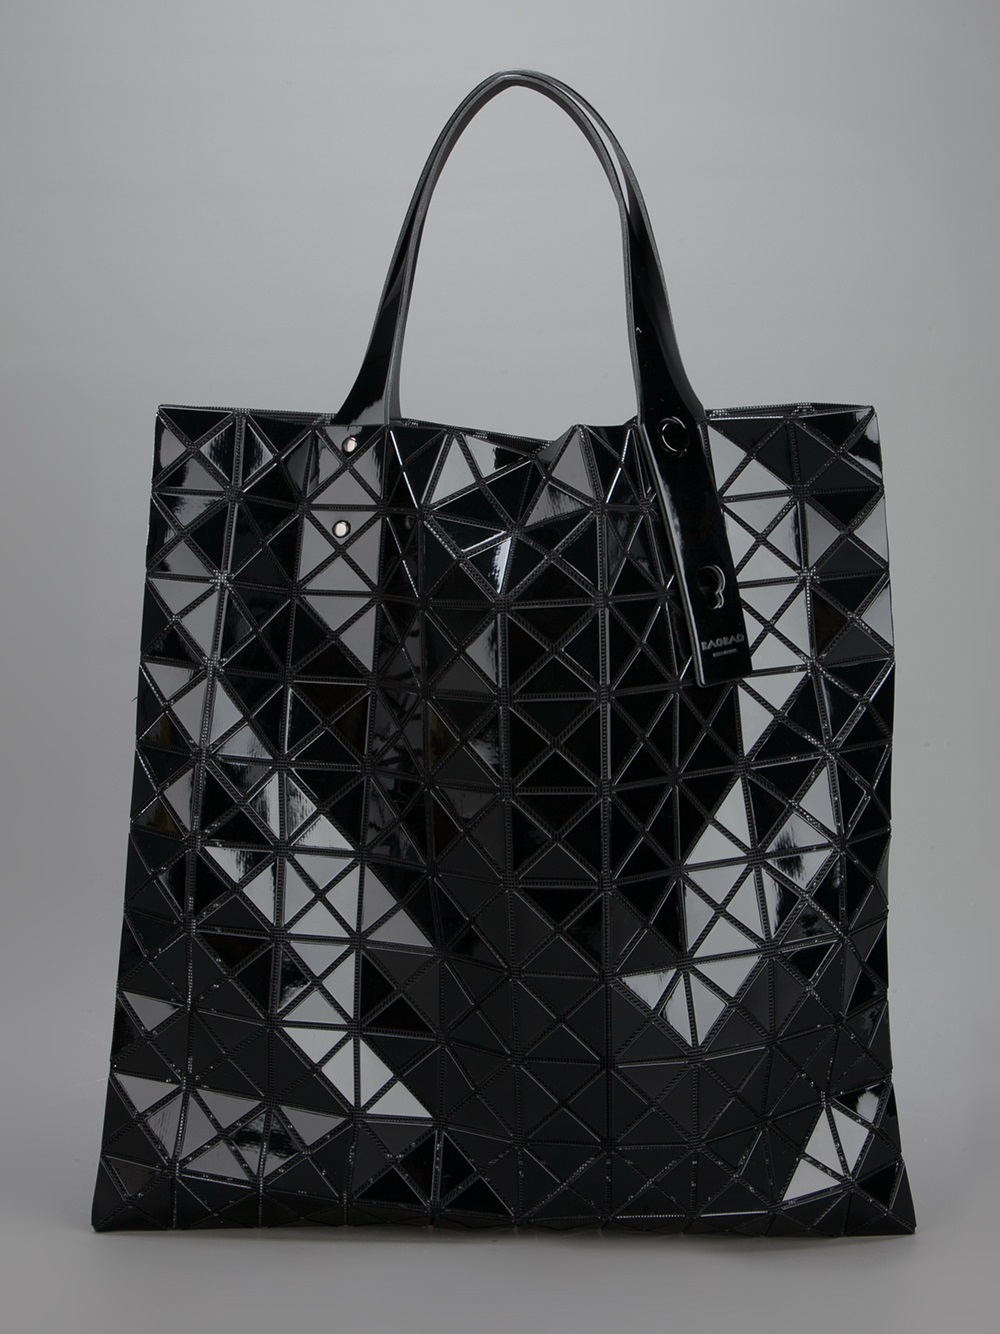 Lyst - Bao bao issey miyake Triangle Panel Shopper in Black